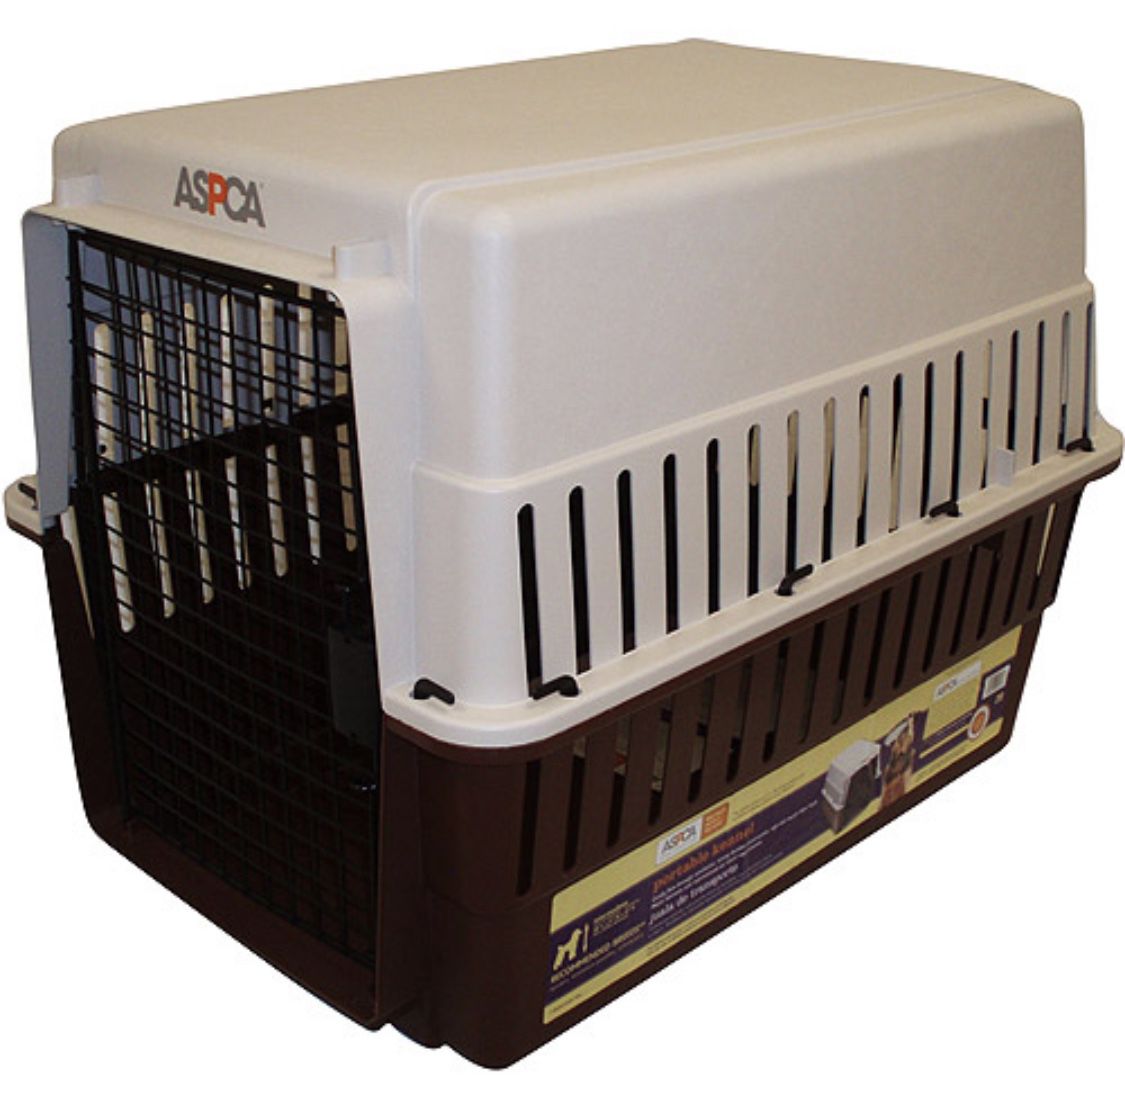 ASPCA Large Portable Kennel - Large 